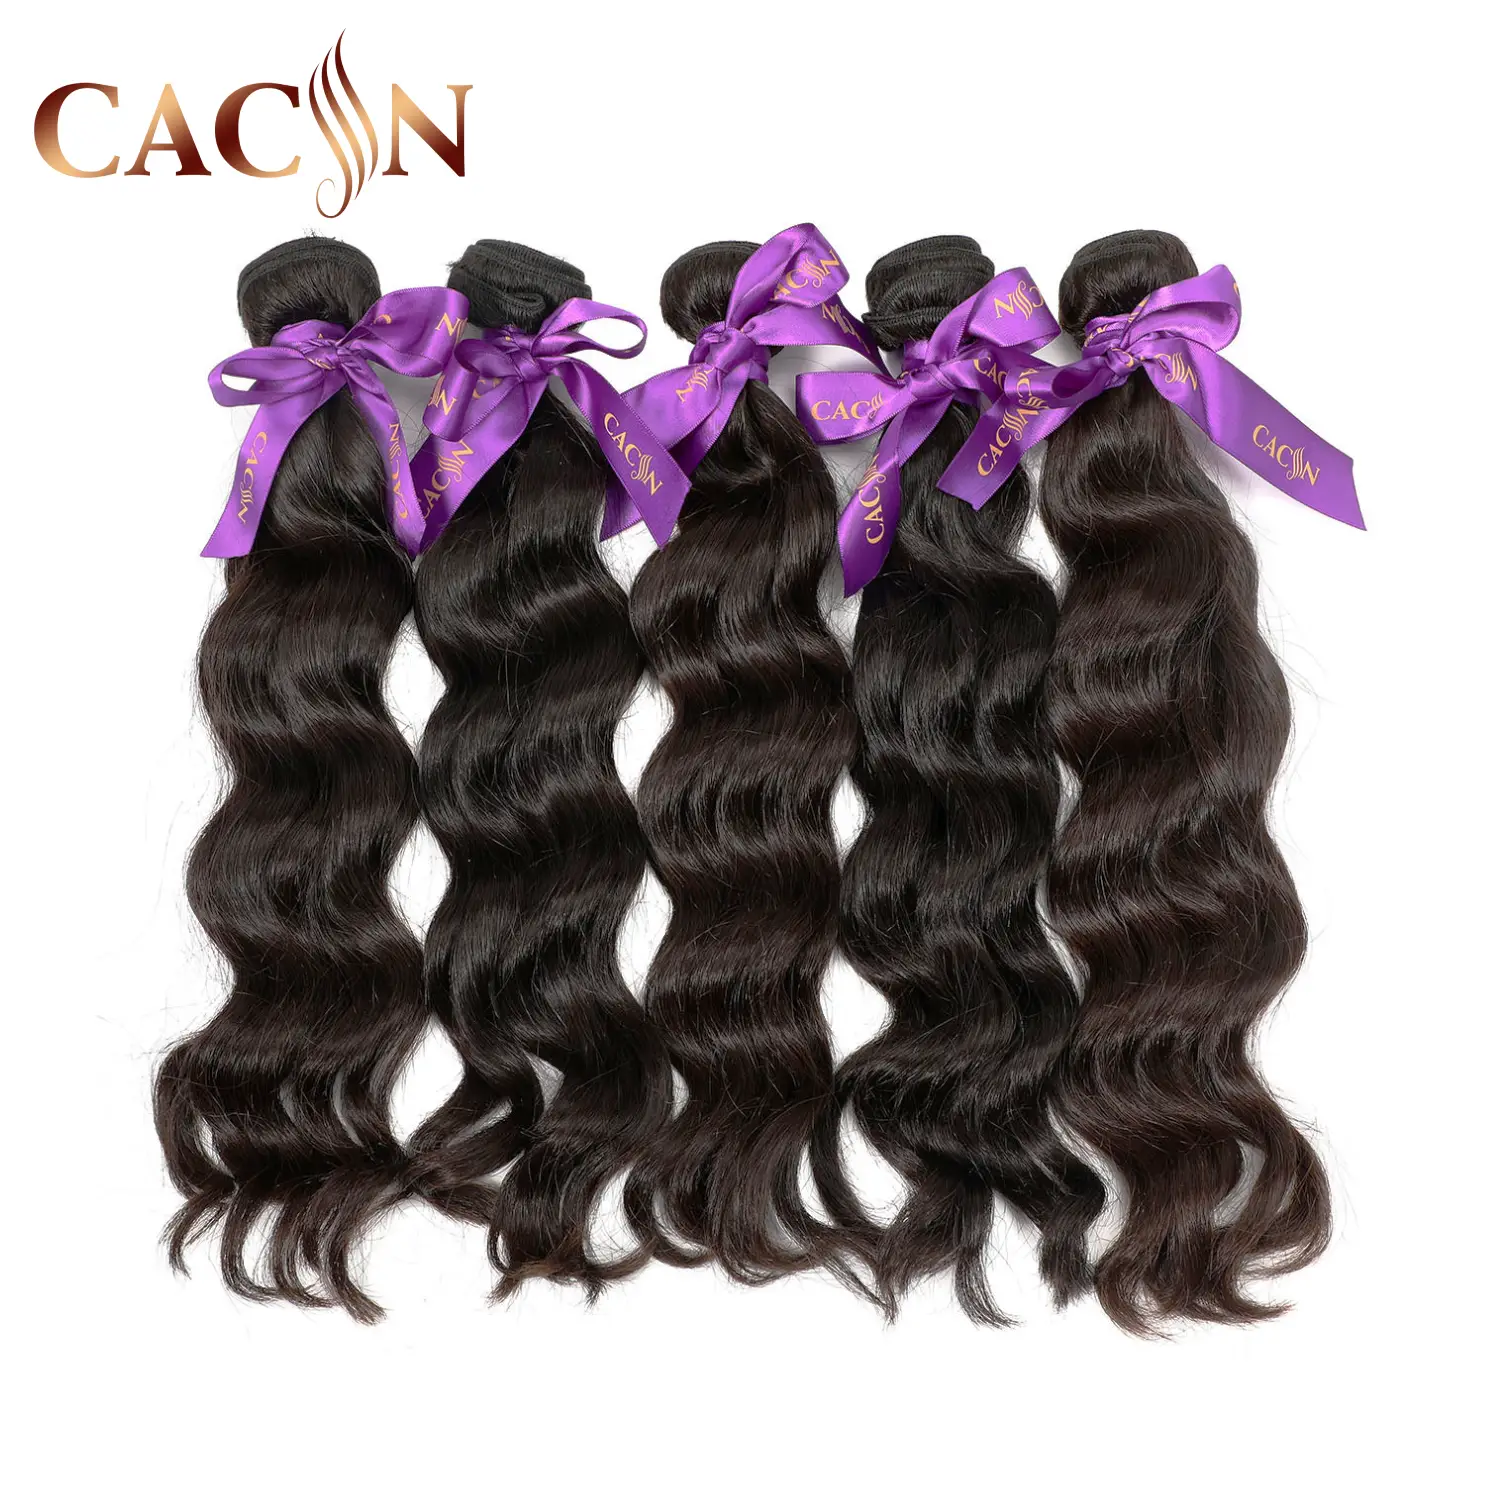 Raw virgin Indian human hair weave styles natural wave 1 bundle, raw hair, free shipping